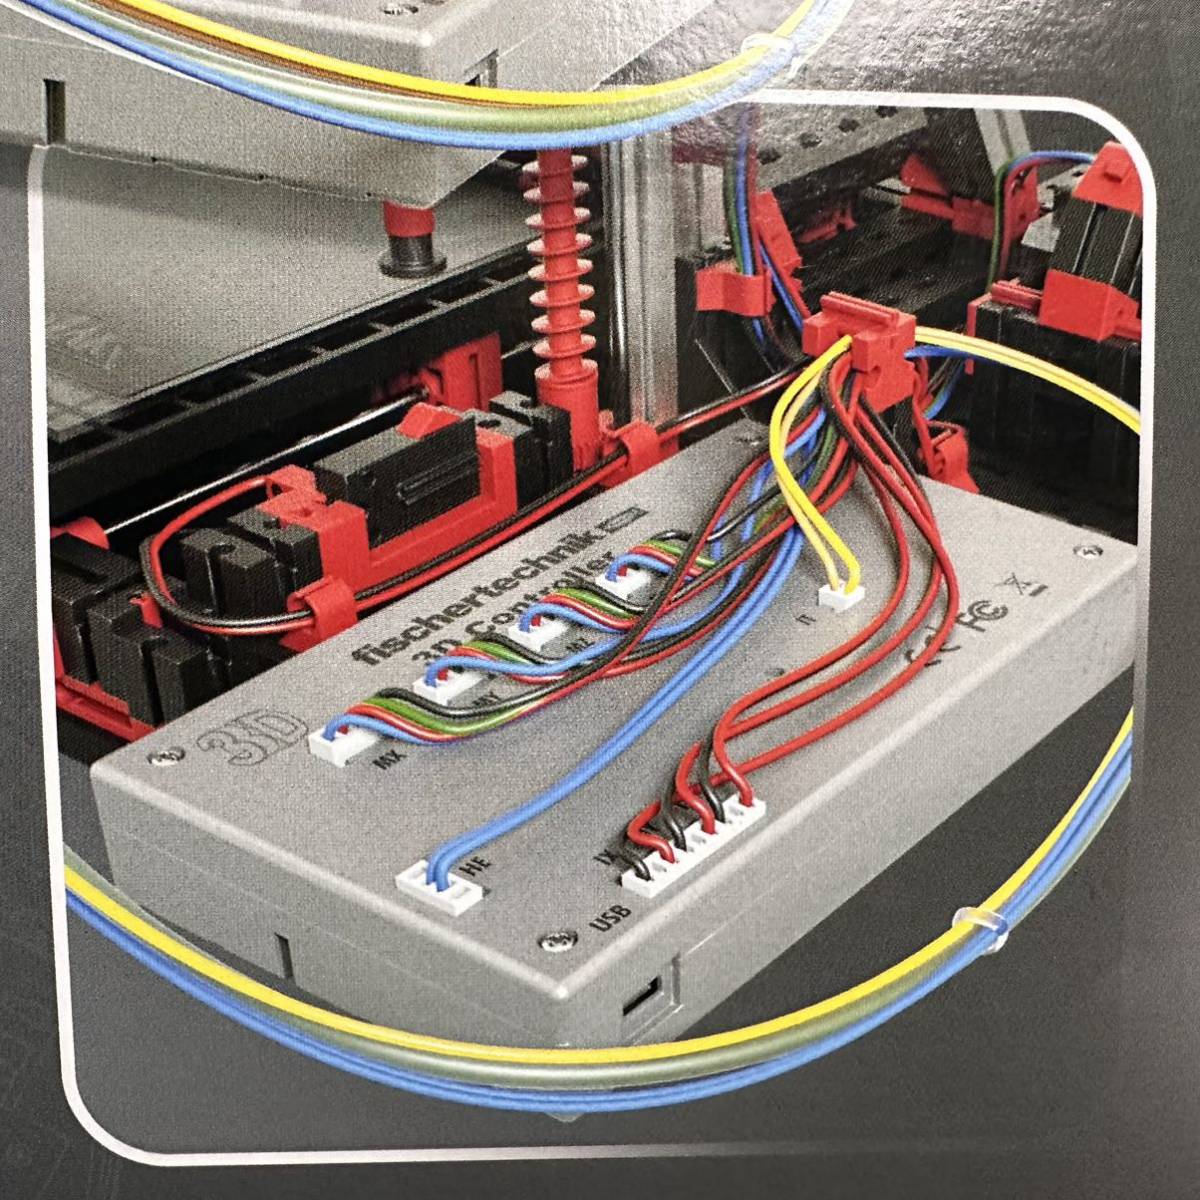 [SX328] fischertechnik フィッシャーテクニック 3D Printer ドイツ製 組立式 試作品制作 電子工作 知育玩具 新品未開封